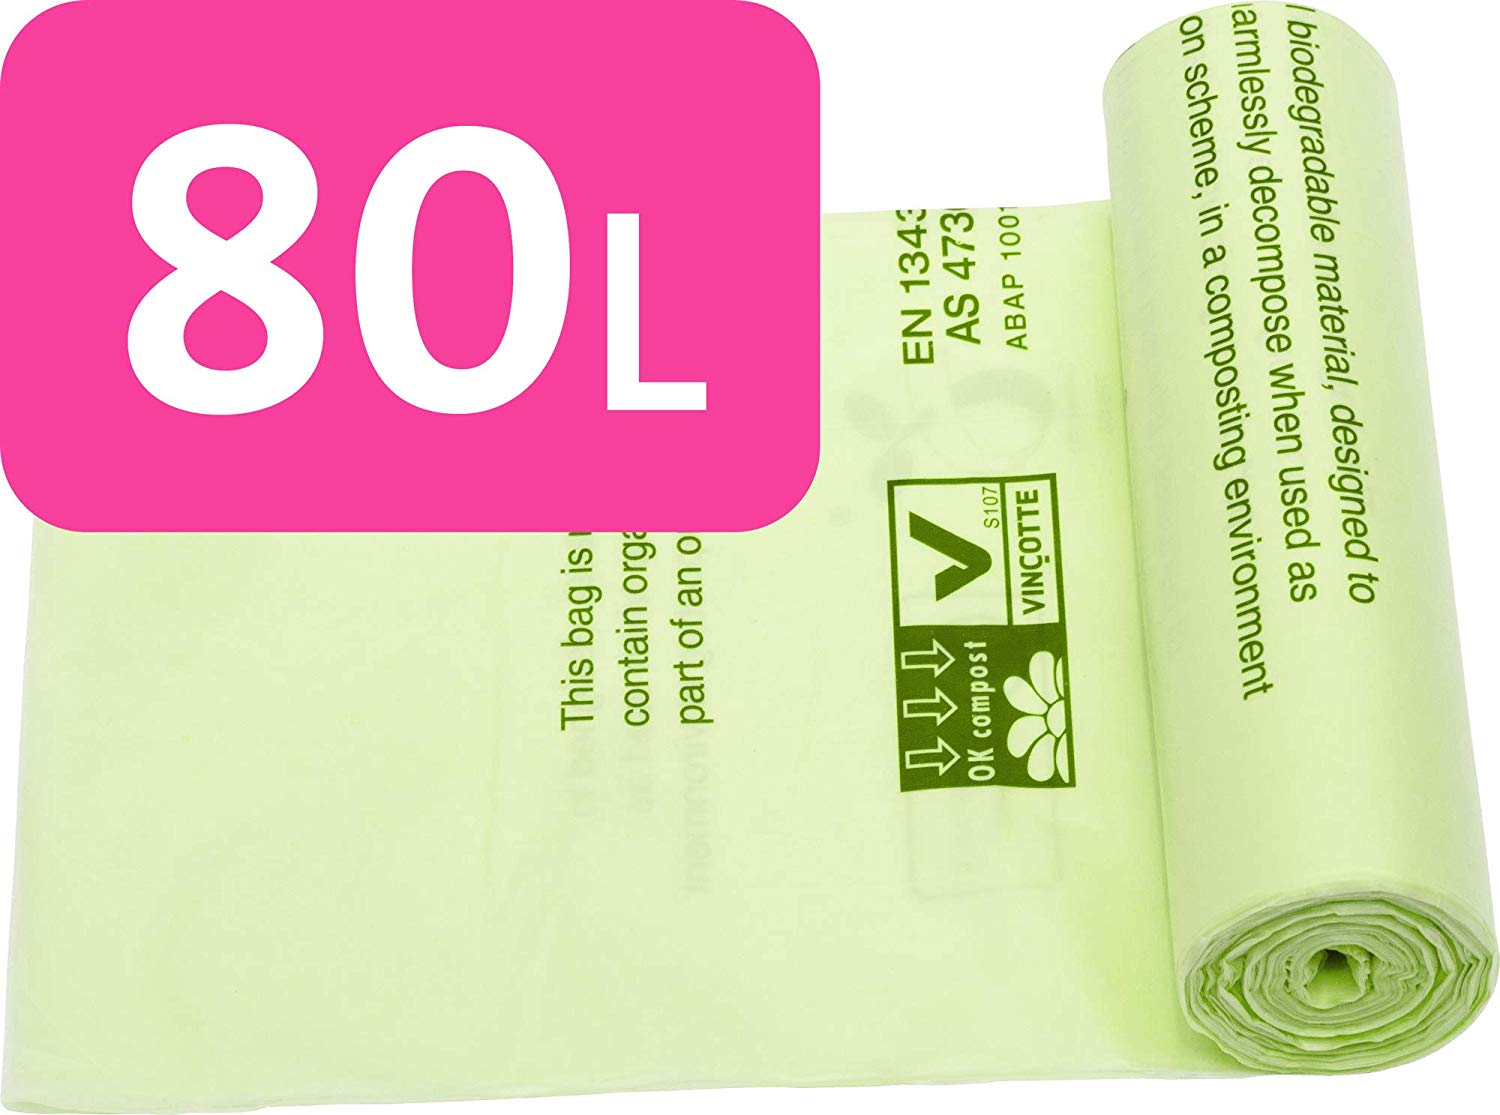 AS4736/5810 100% biodegradable compostable wavetop corn starch garbage trash bag bin liner